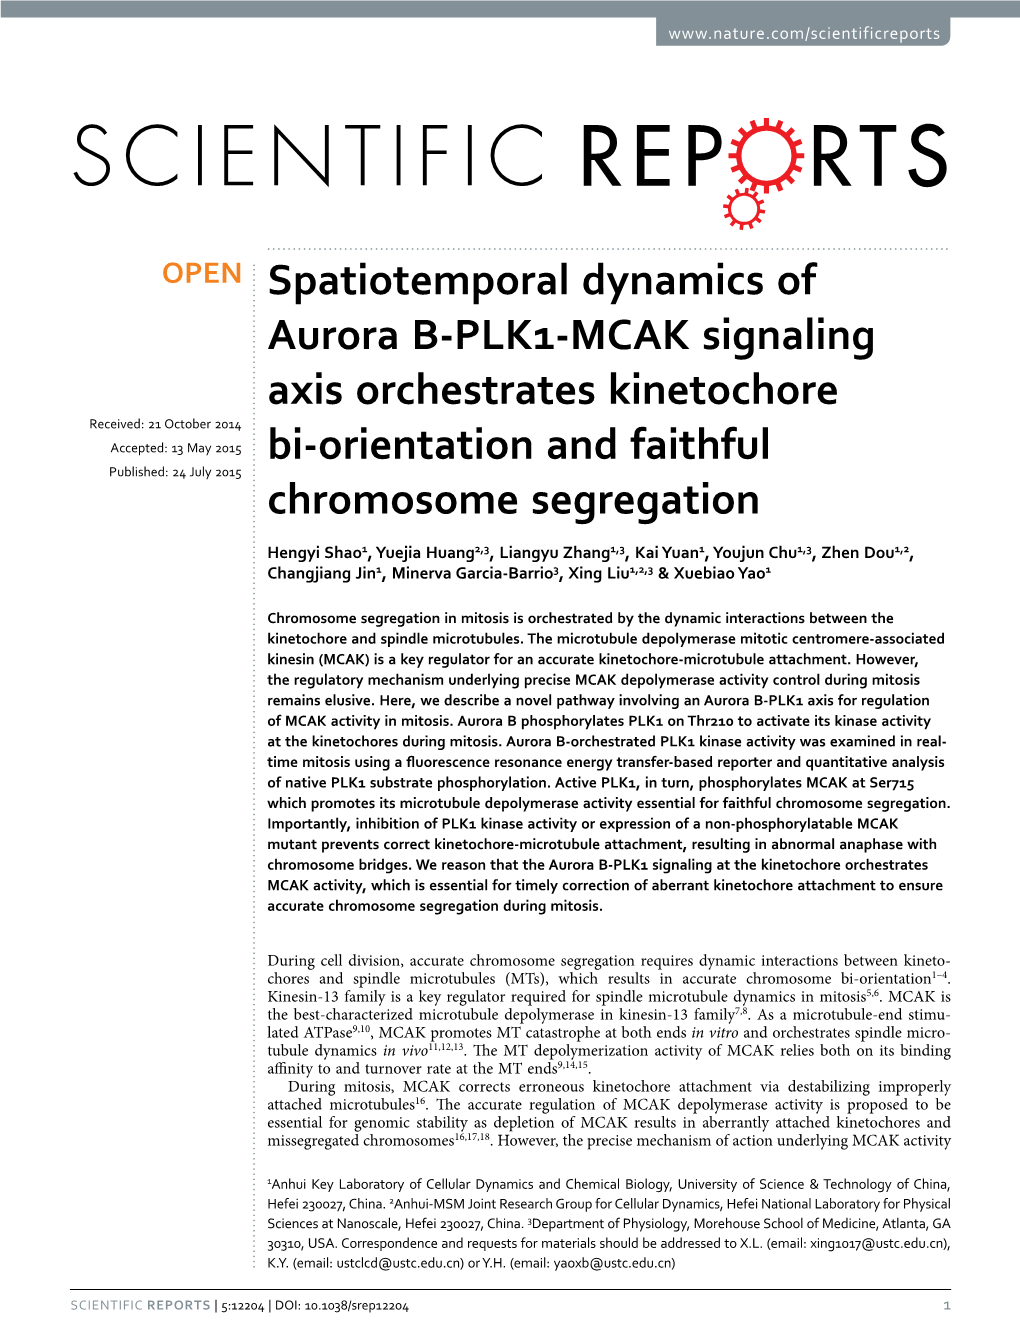 Spatiotemporal Dynamics of Aurora B-PLK1-MCAK Signaling Axis